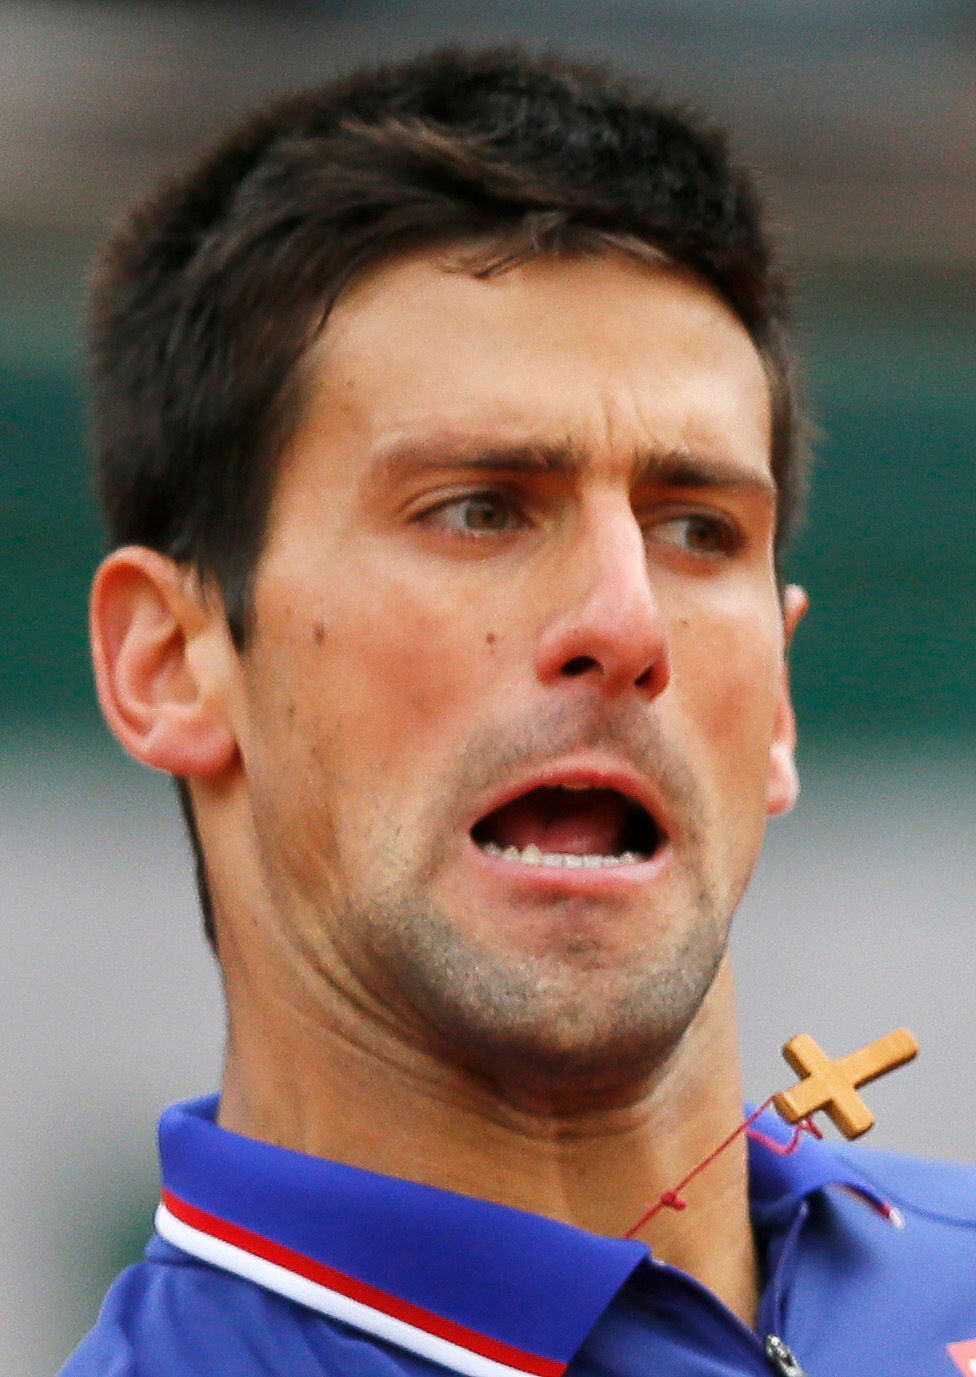 Novak Djokovič na French Open 2013